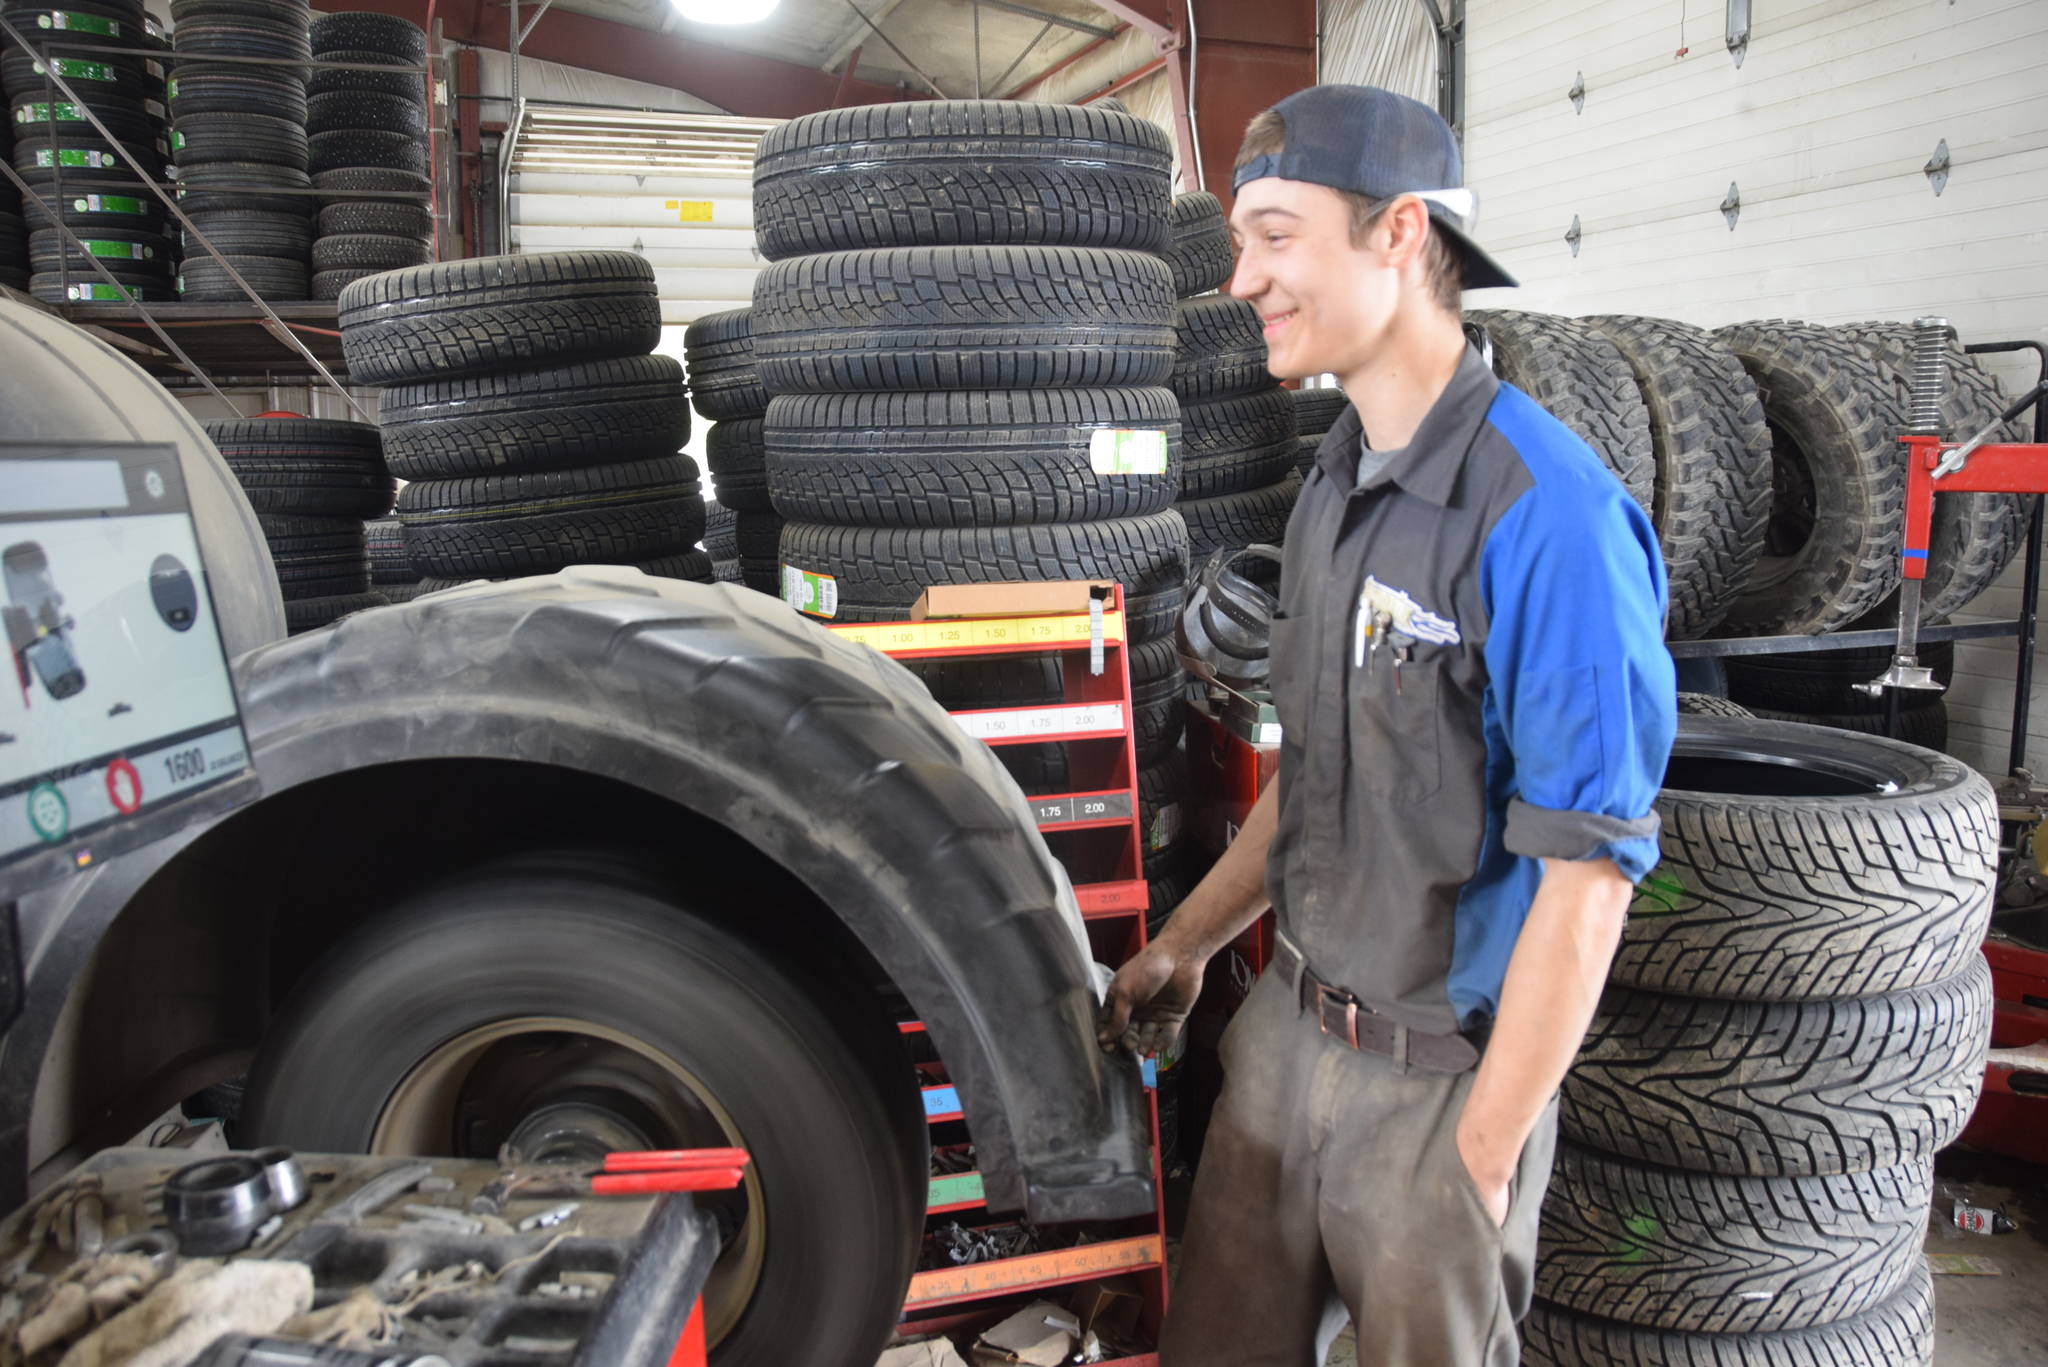 Alyeska Tire employee David Baldwin balances a tire at the location in Kenai, Alaska on May 2, 2019. (Photo by Brian Mazurek)